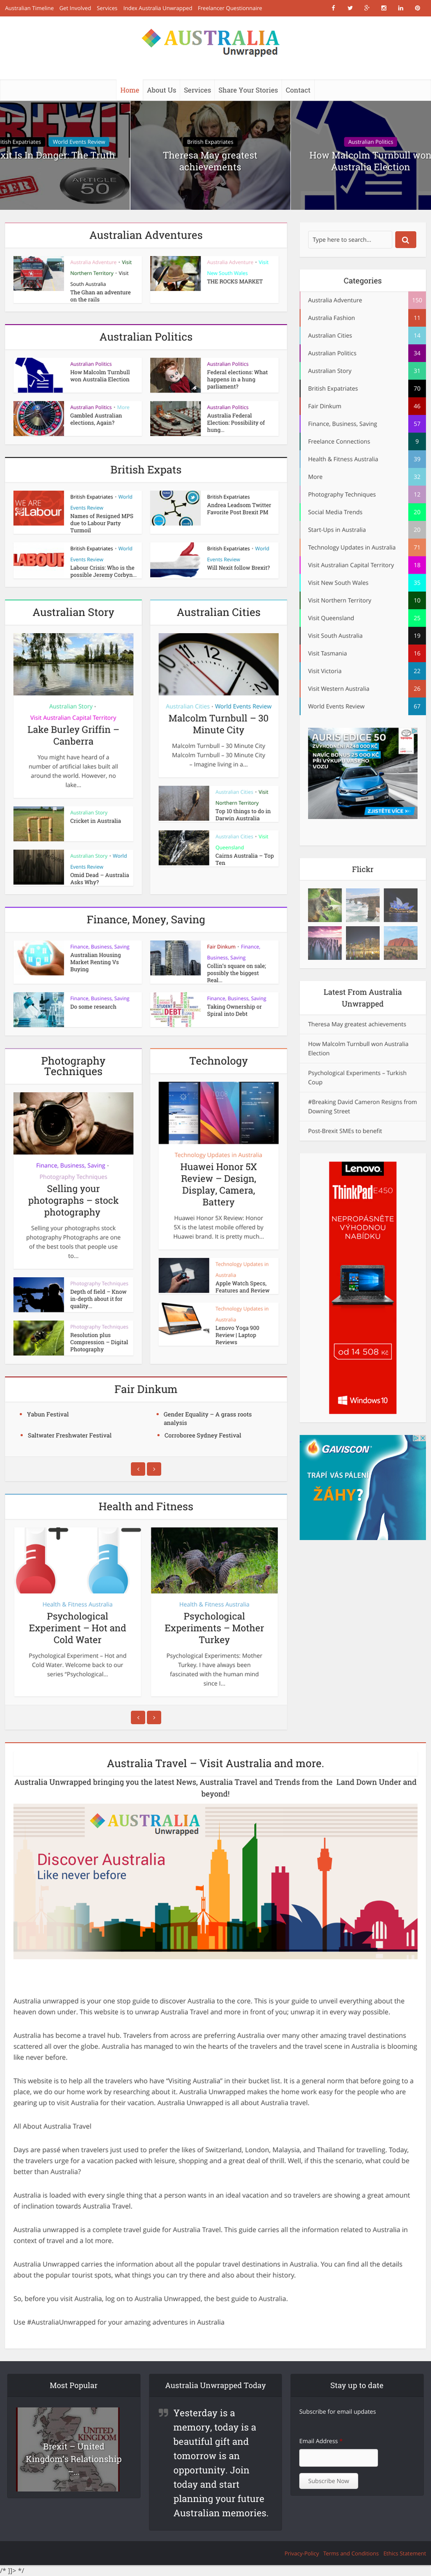 Wordpress Based News / Magazine Website